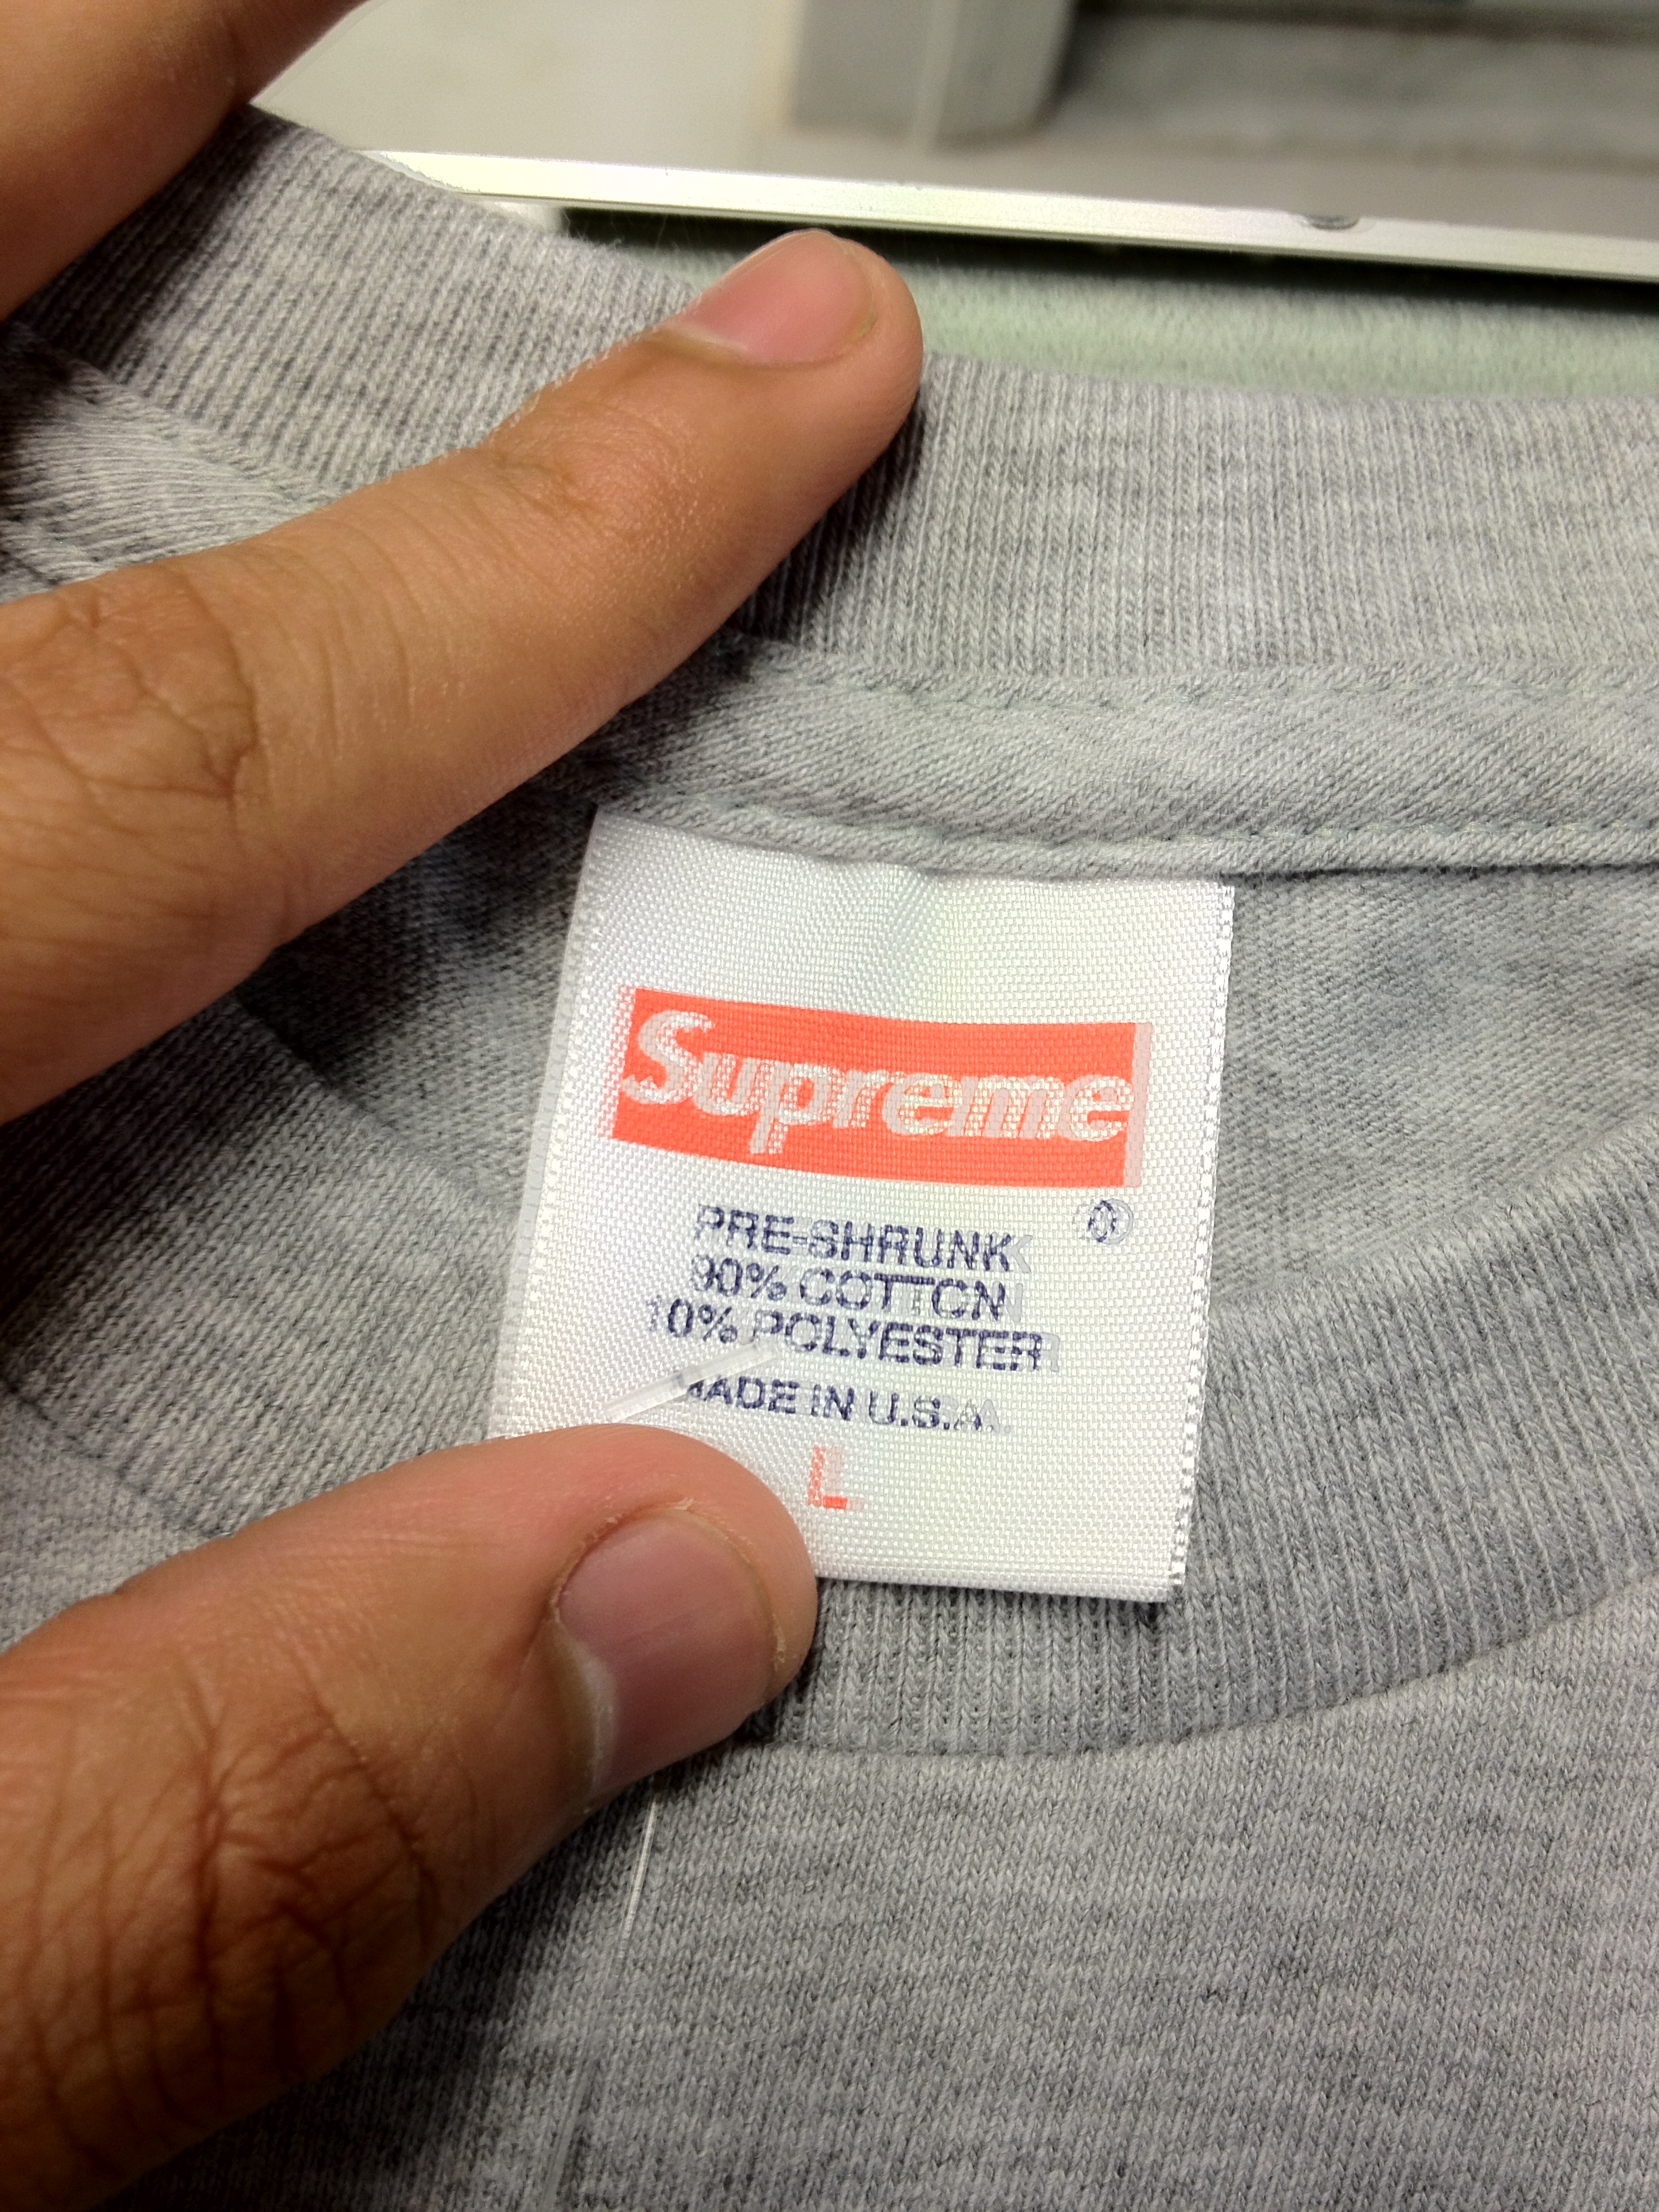 Supreme Shirt Fake Vs Real